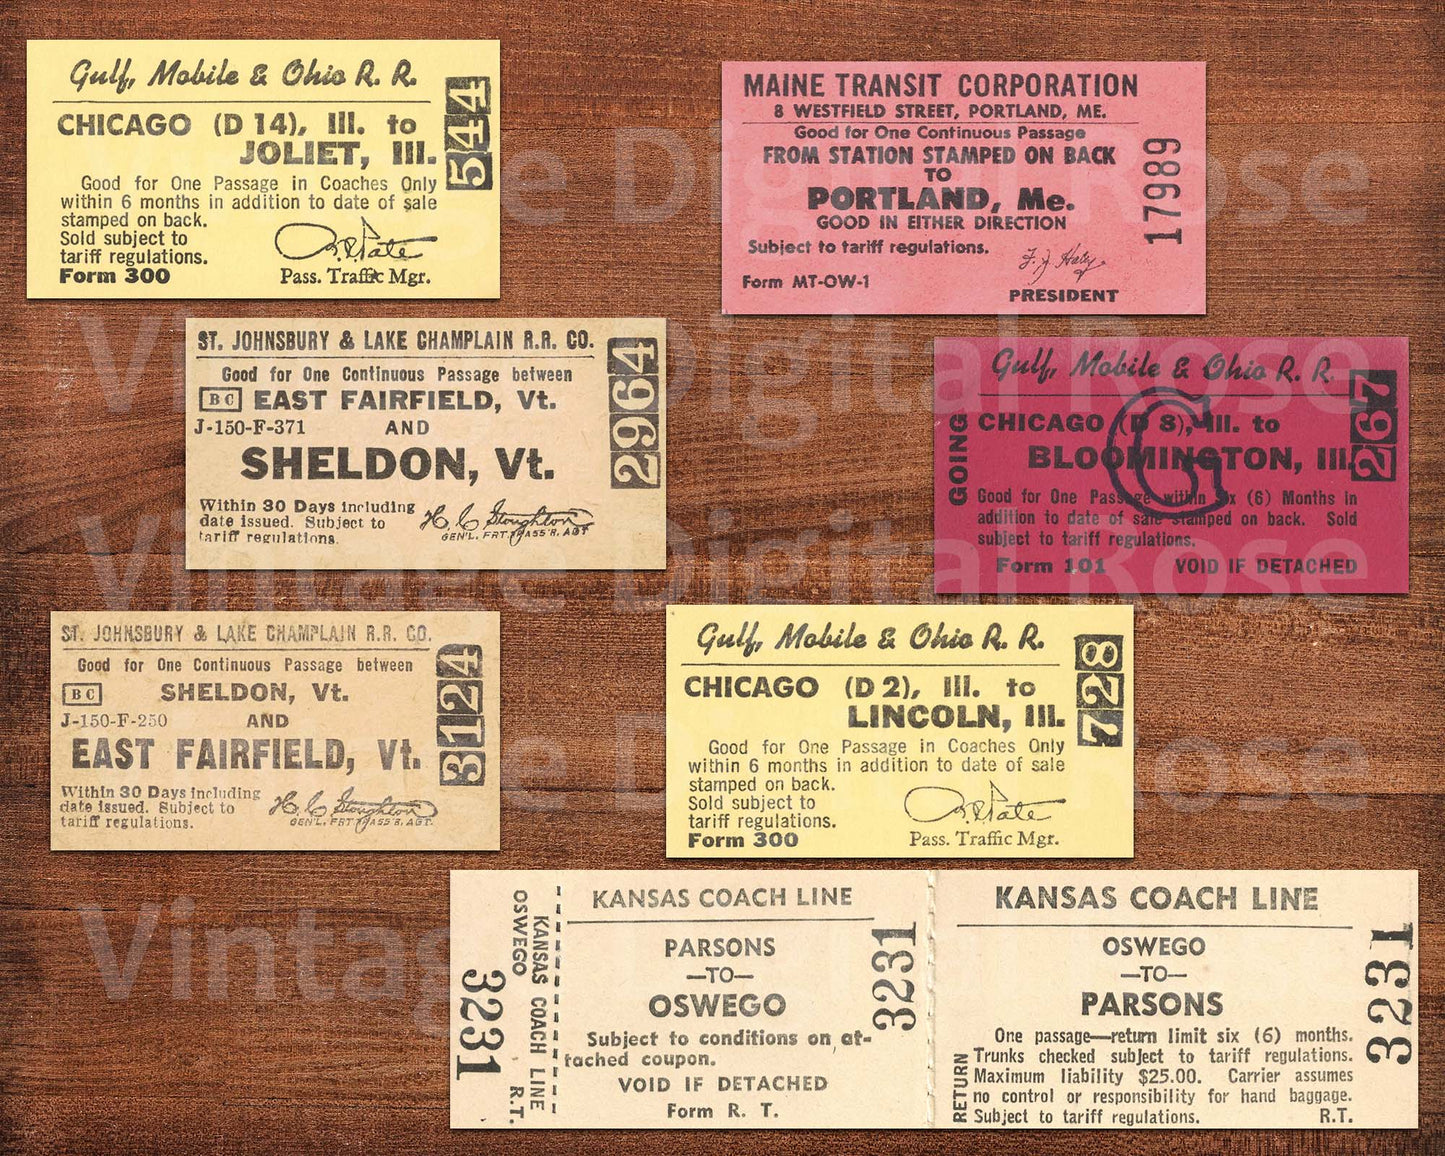 Vintage Printable Assorted Railroad Tickets Digital Collage Sheet JPG Format Set of 7 Seven Tickets Antique Transportation Ephemera